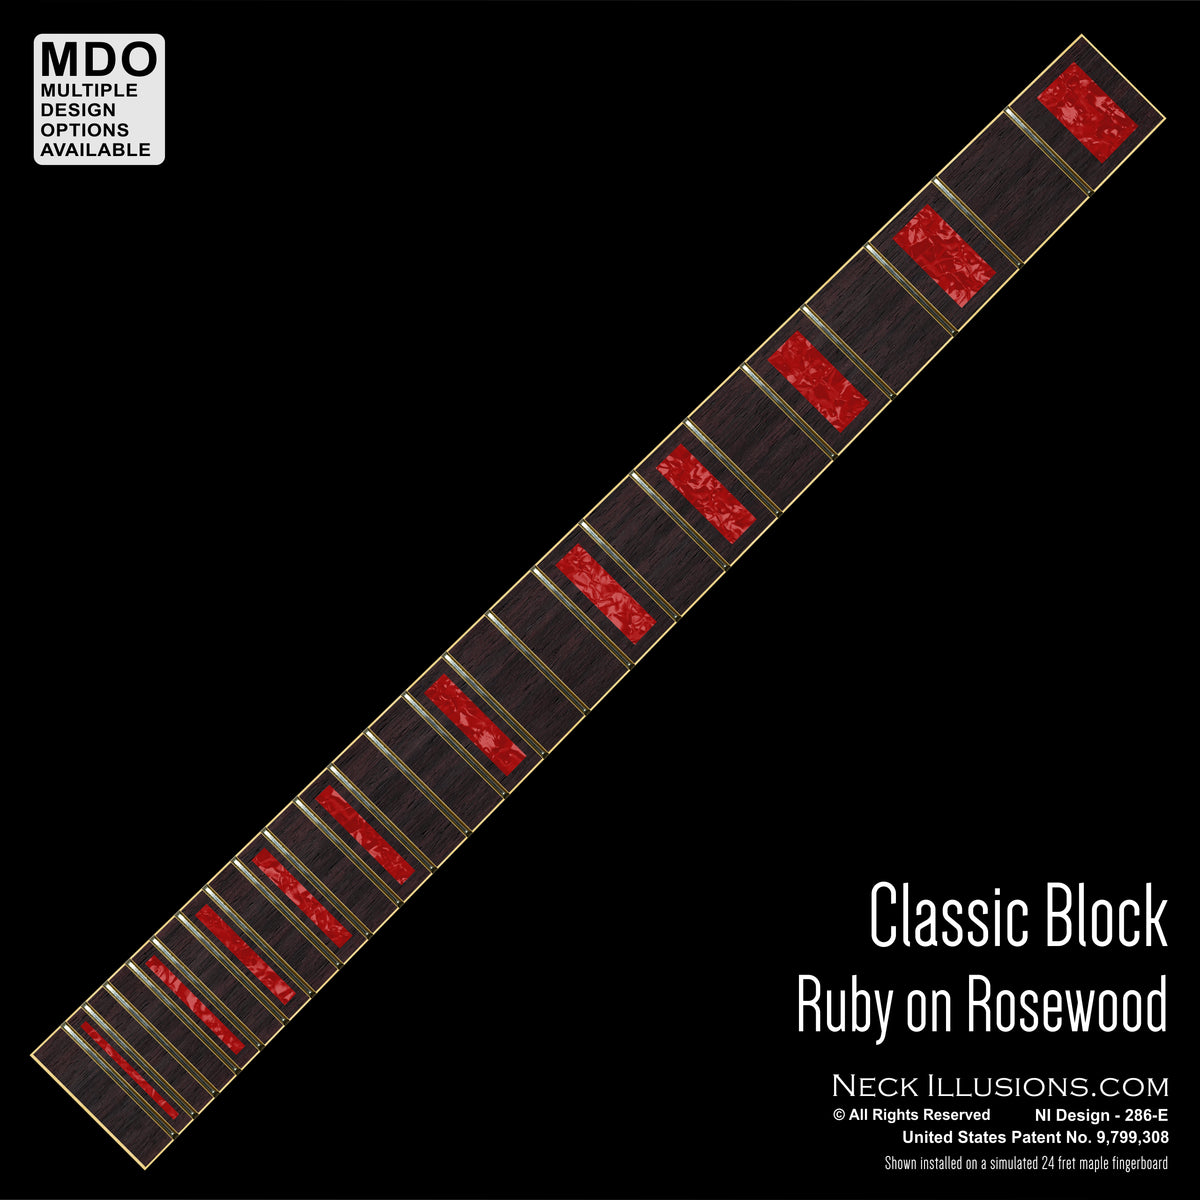 Classic Blocks on Rosewood